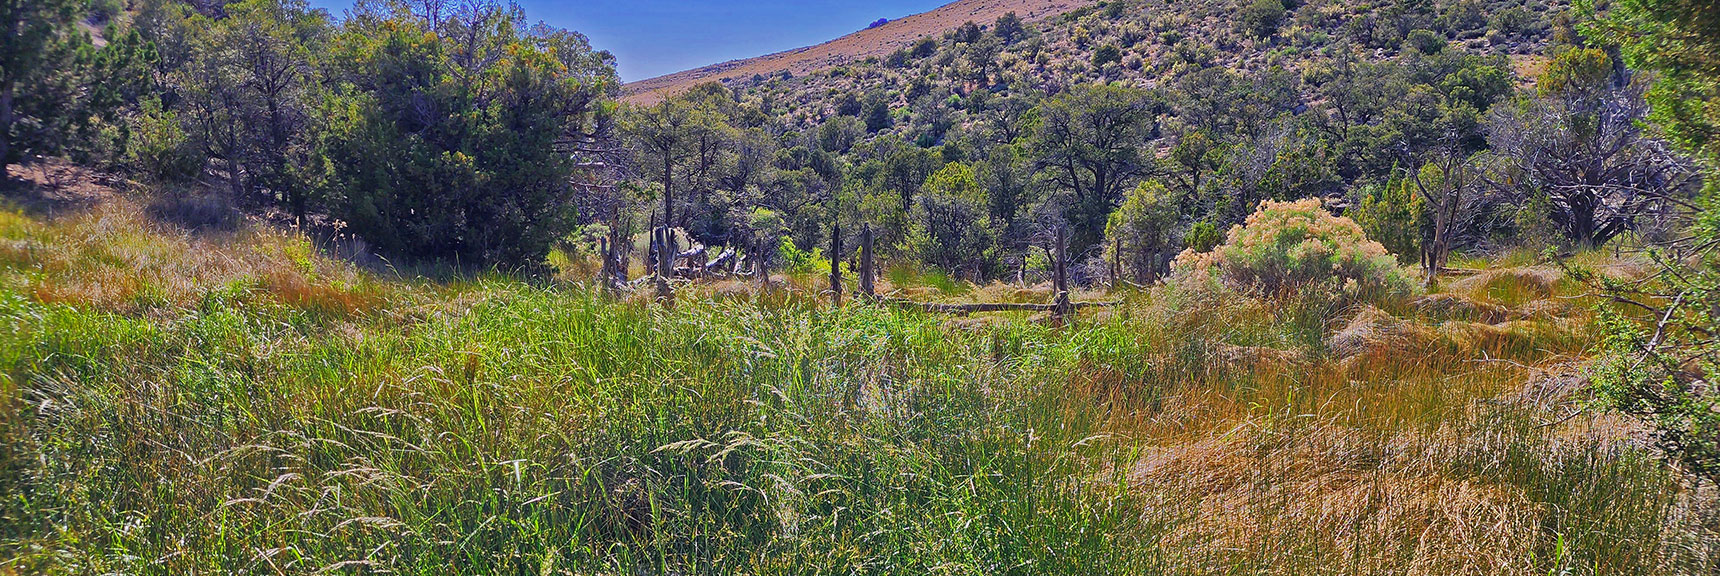 Bootleg Spring Features Tall "Rattlesnake" Grass Meadow with Deep Spongy Snake-Hiding Base. | Little Zion | Rainbow Mountain Wilderness, Nevada